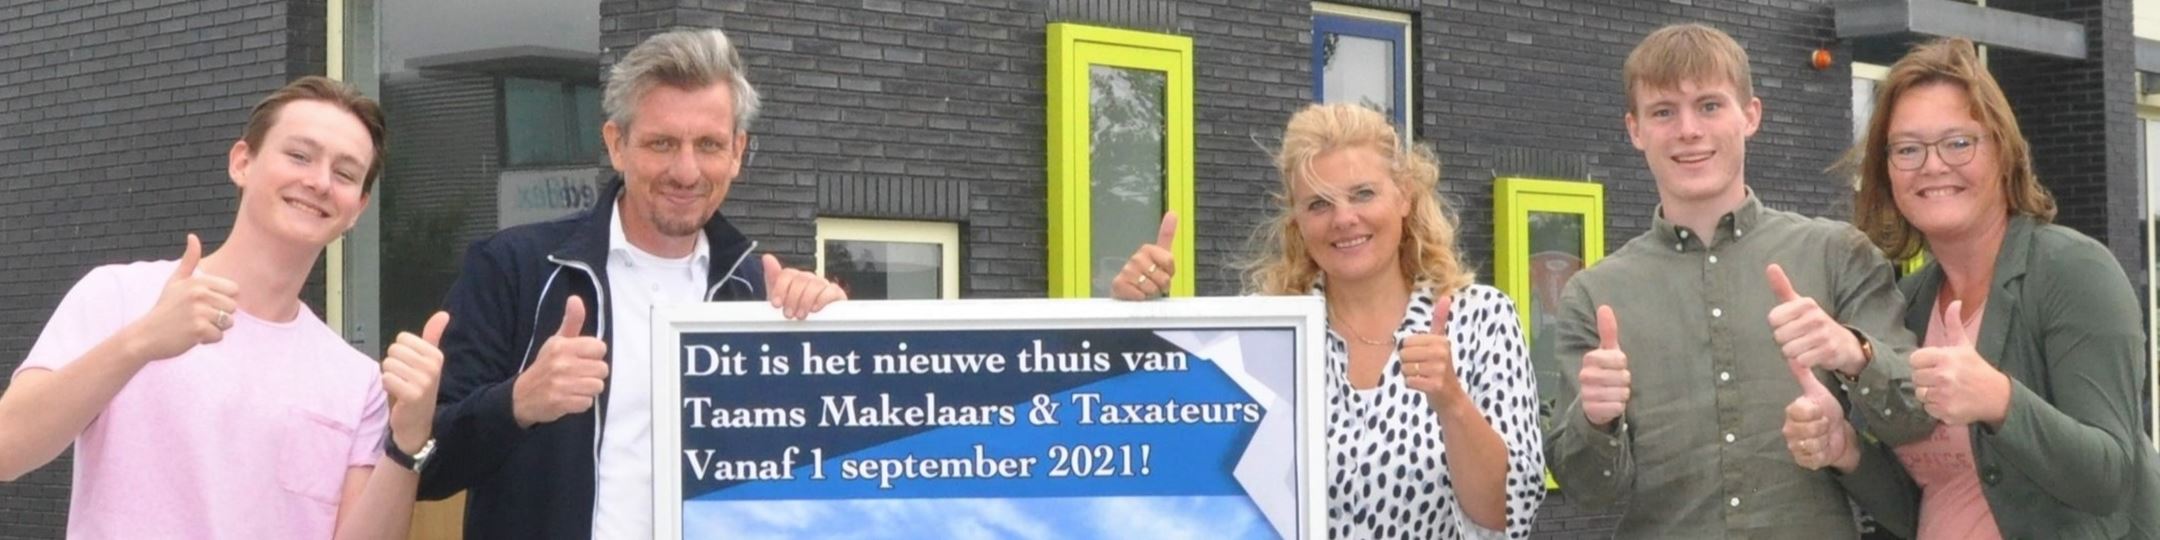 Banner Taams Makelaars & Taxateurs